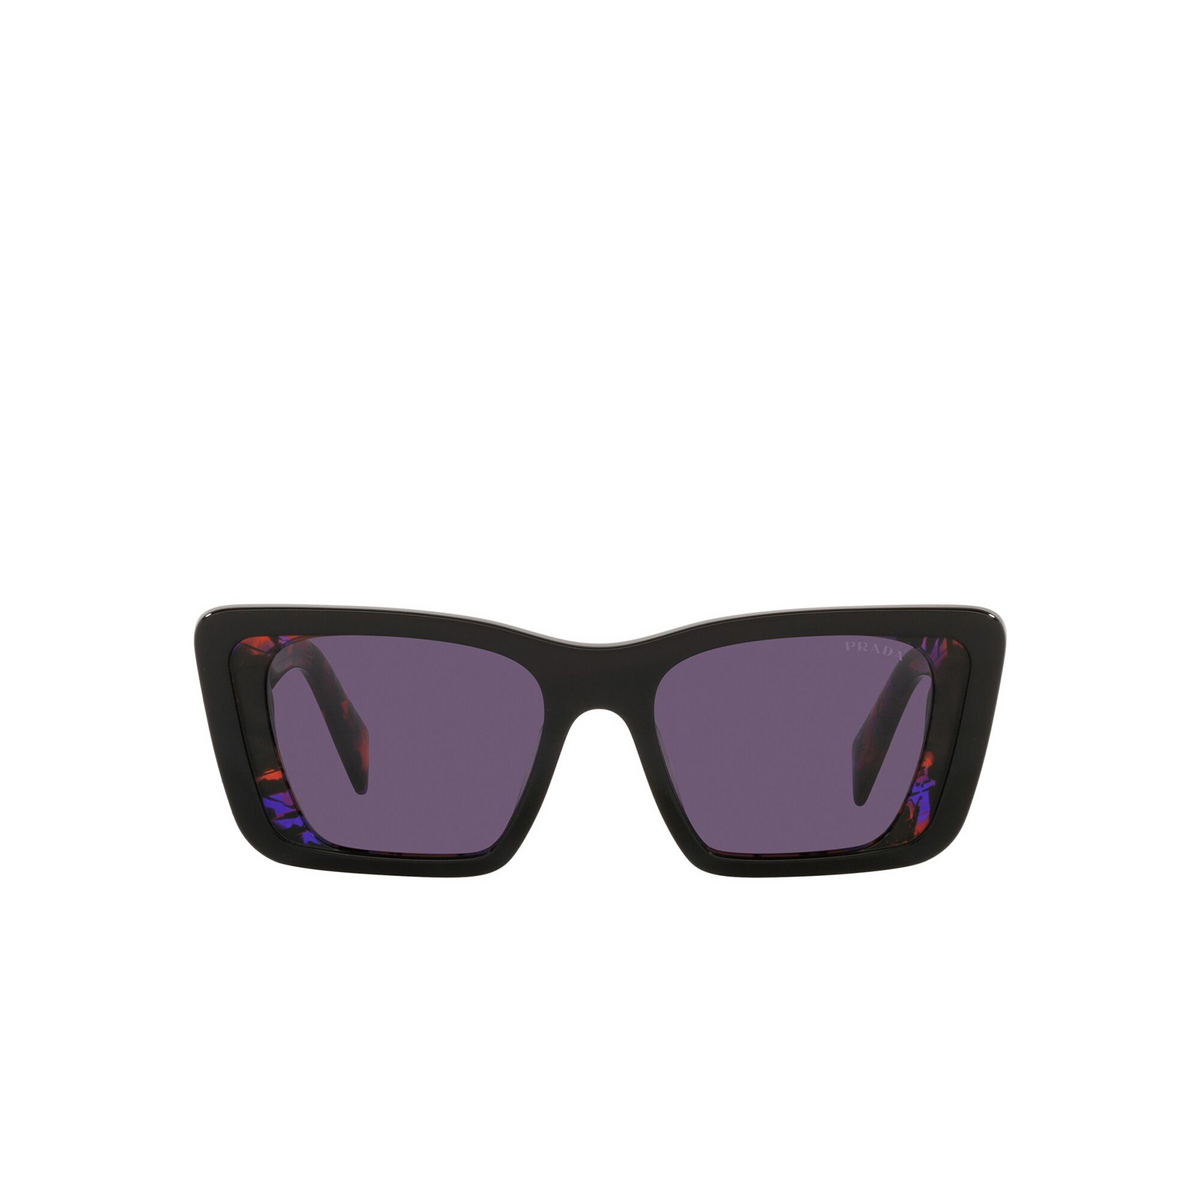 Prada® Butterfly Sunglasses: PR 08YS color Black / Havana Abstract 04V6O2 - front view.